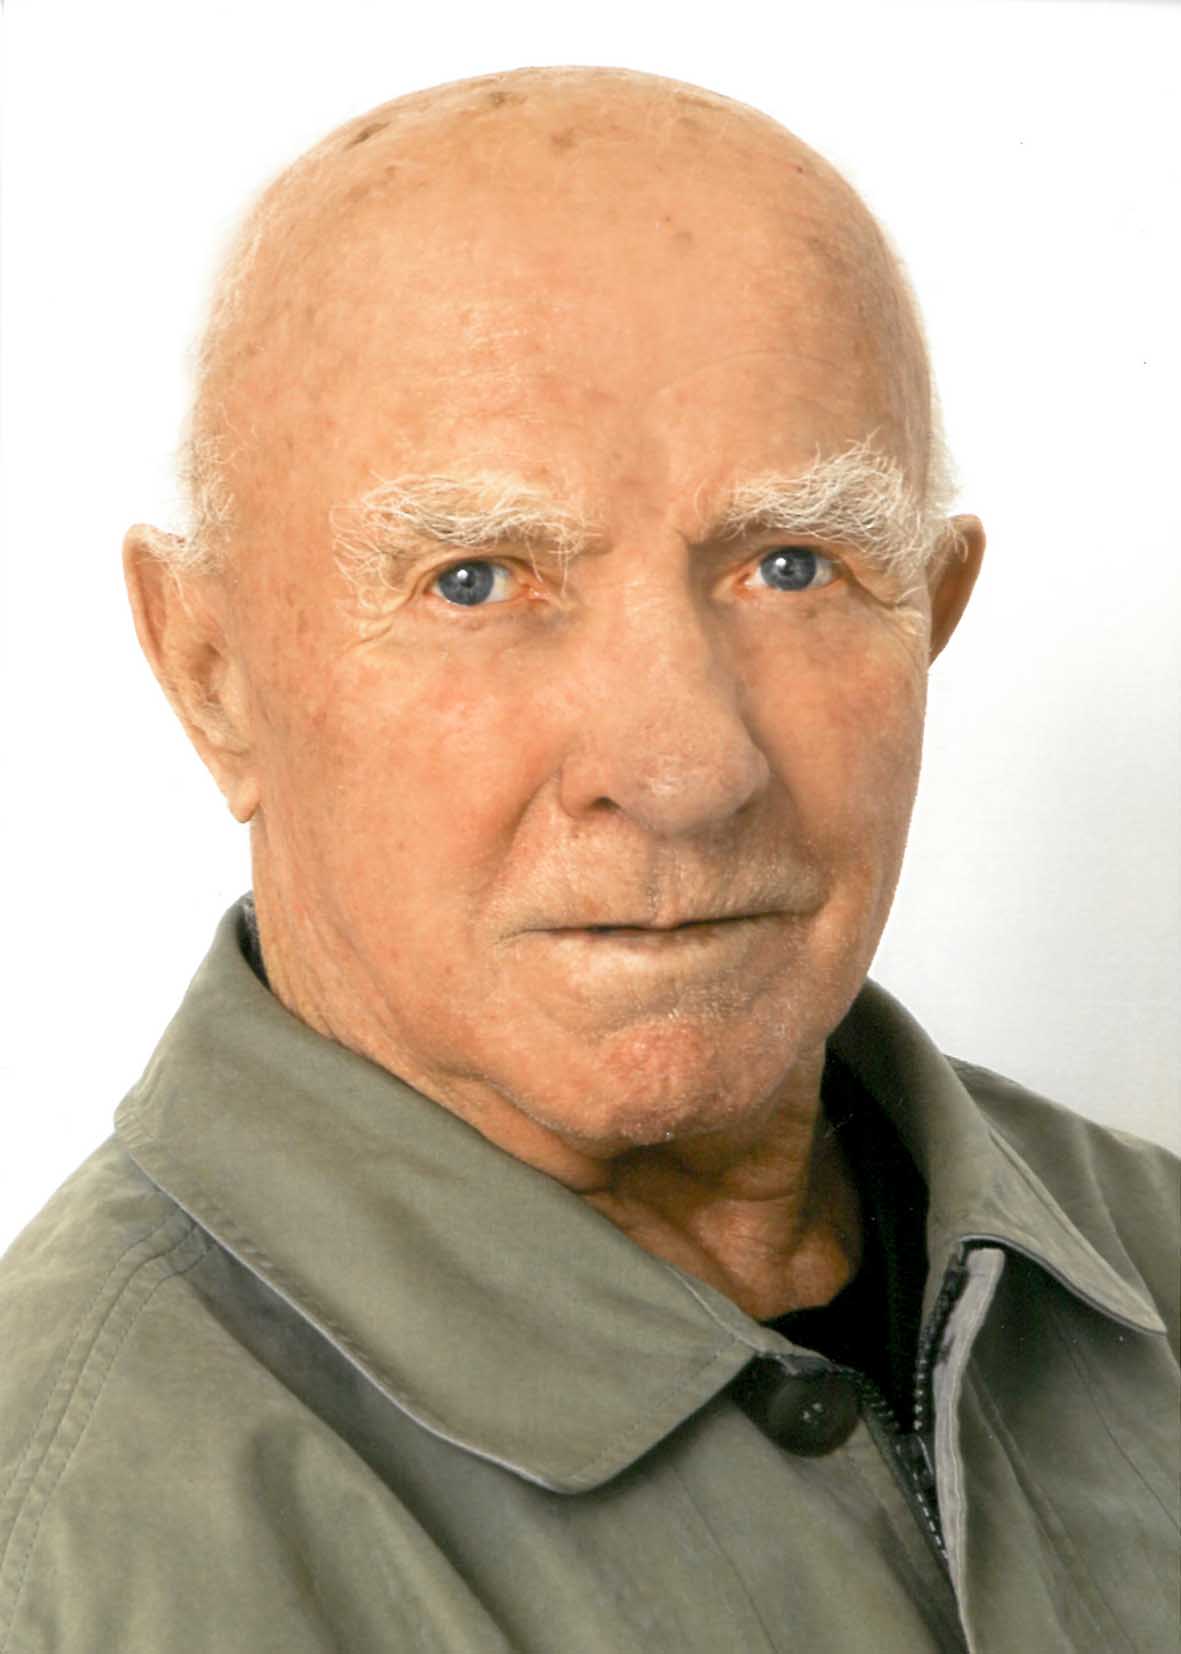 Edmund Meierhofer (84)